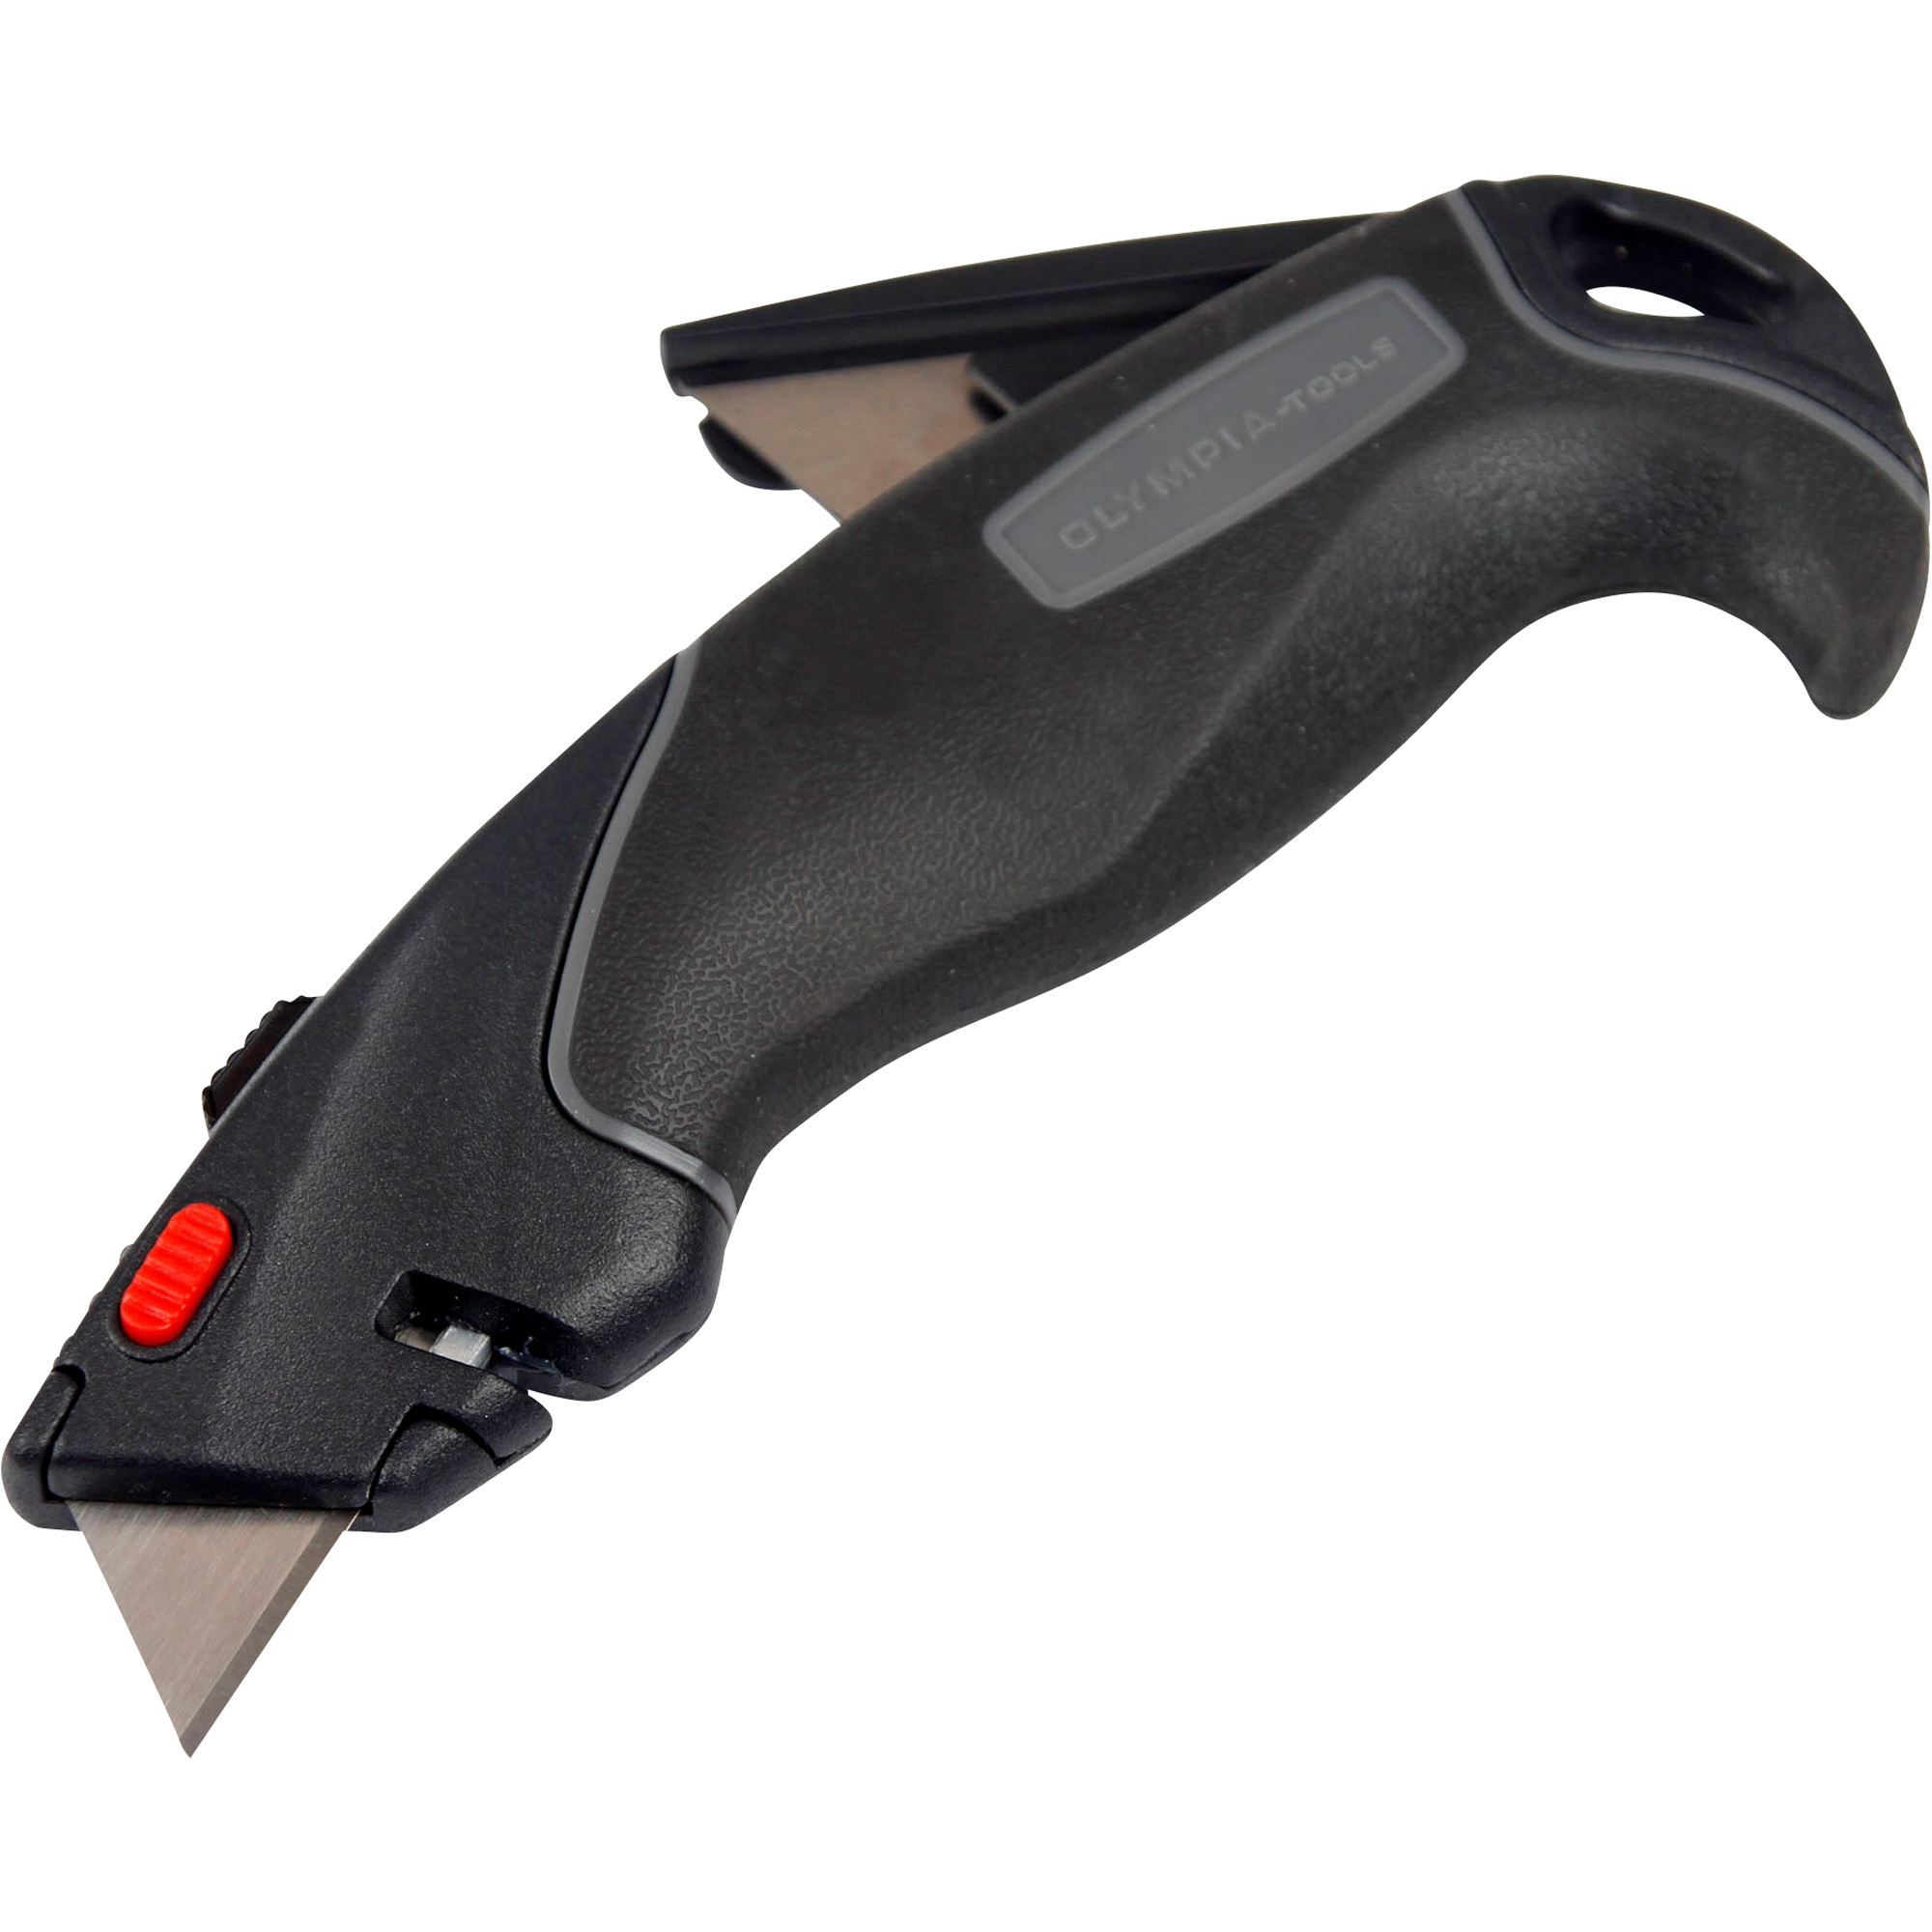 Olympia Tools Premium Hook Utility Knife â 4-Position Blade, Model 33-053